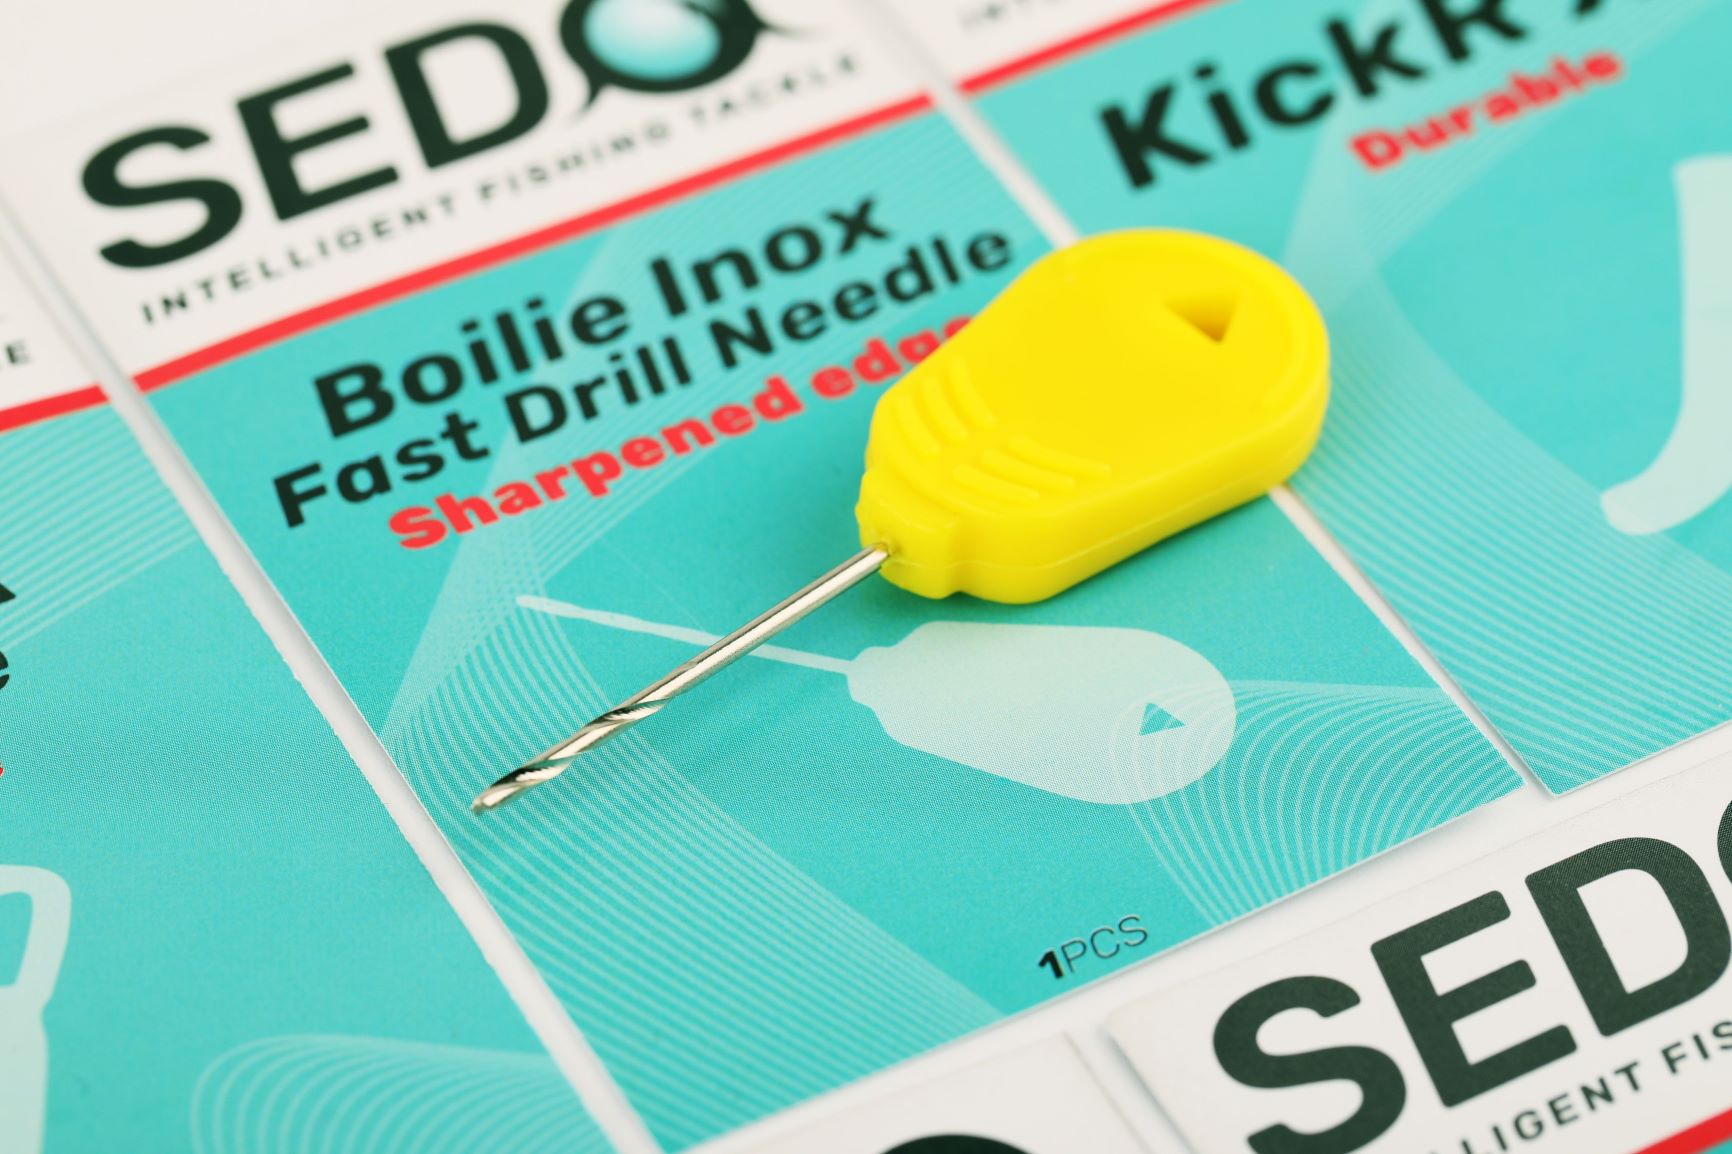 Sedo Boilie Inox  Fast Drill Needle